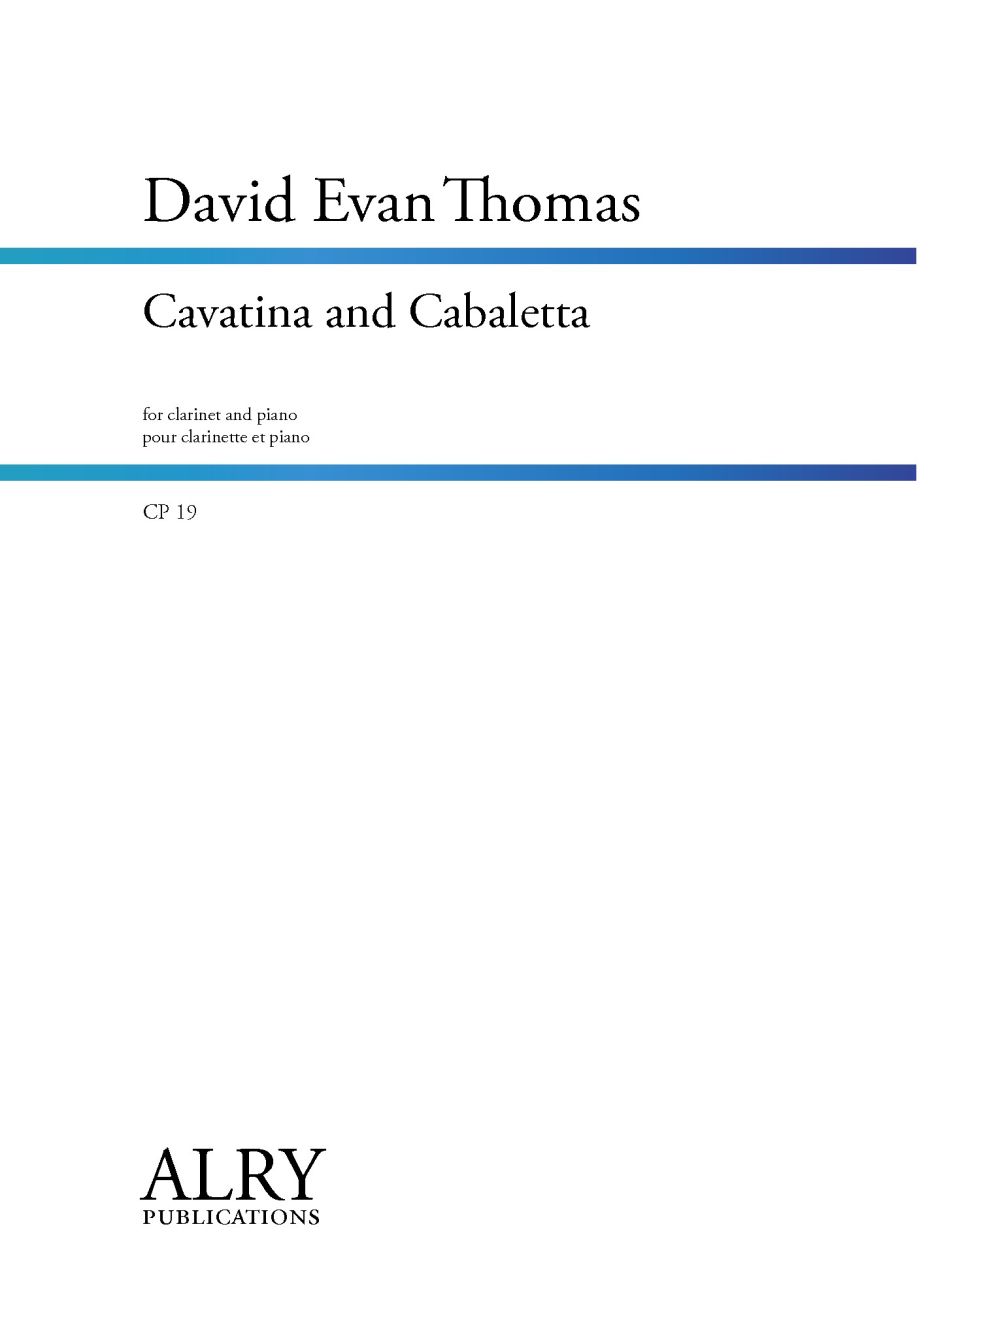 Cavatina And Cabaletta (THOMAS DAVID EVAN)